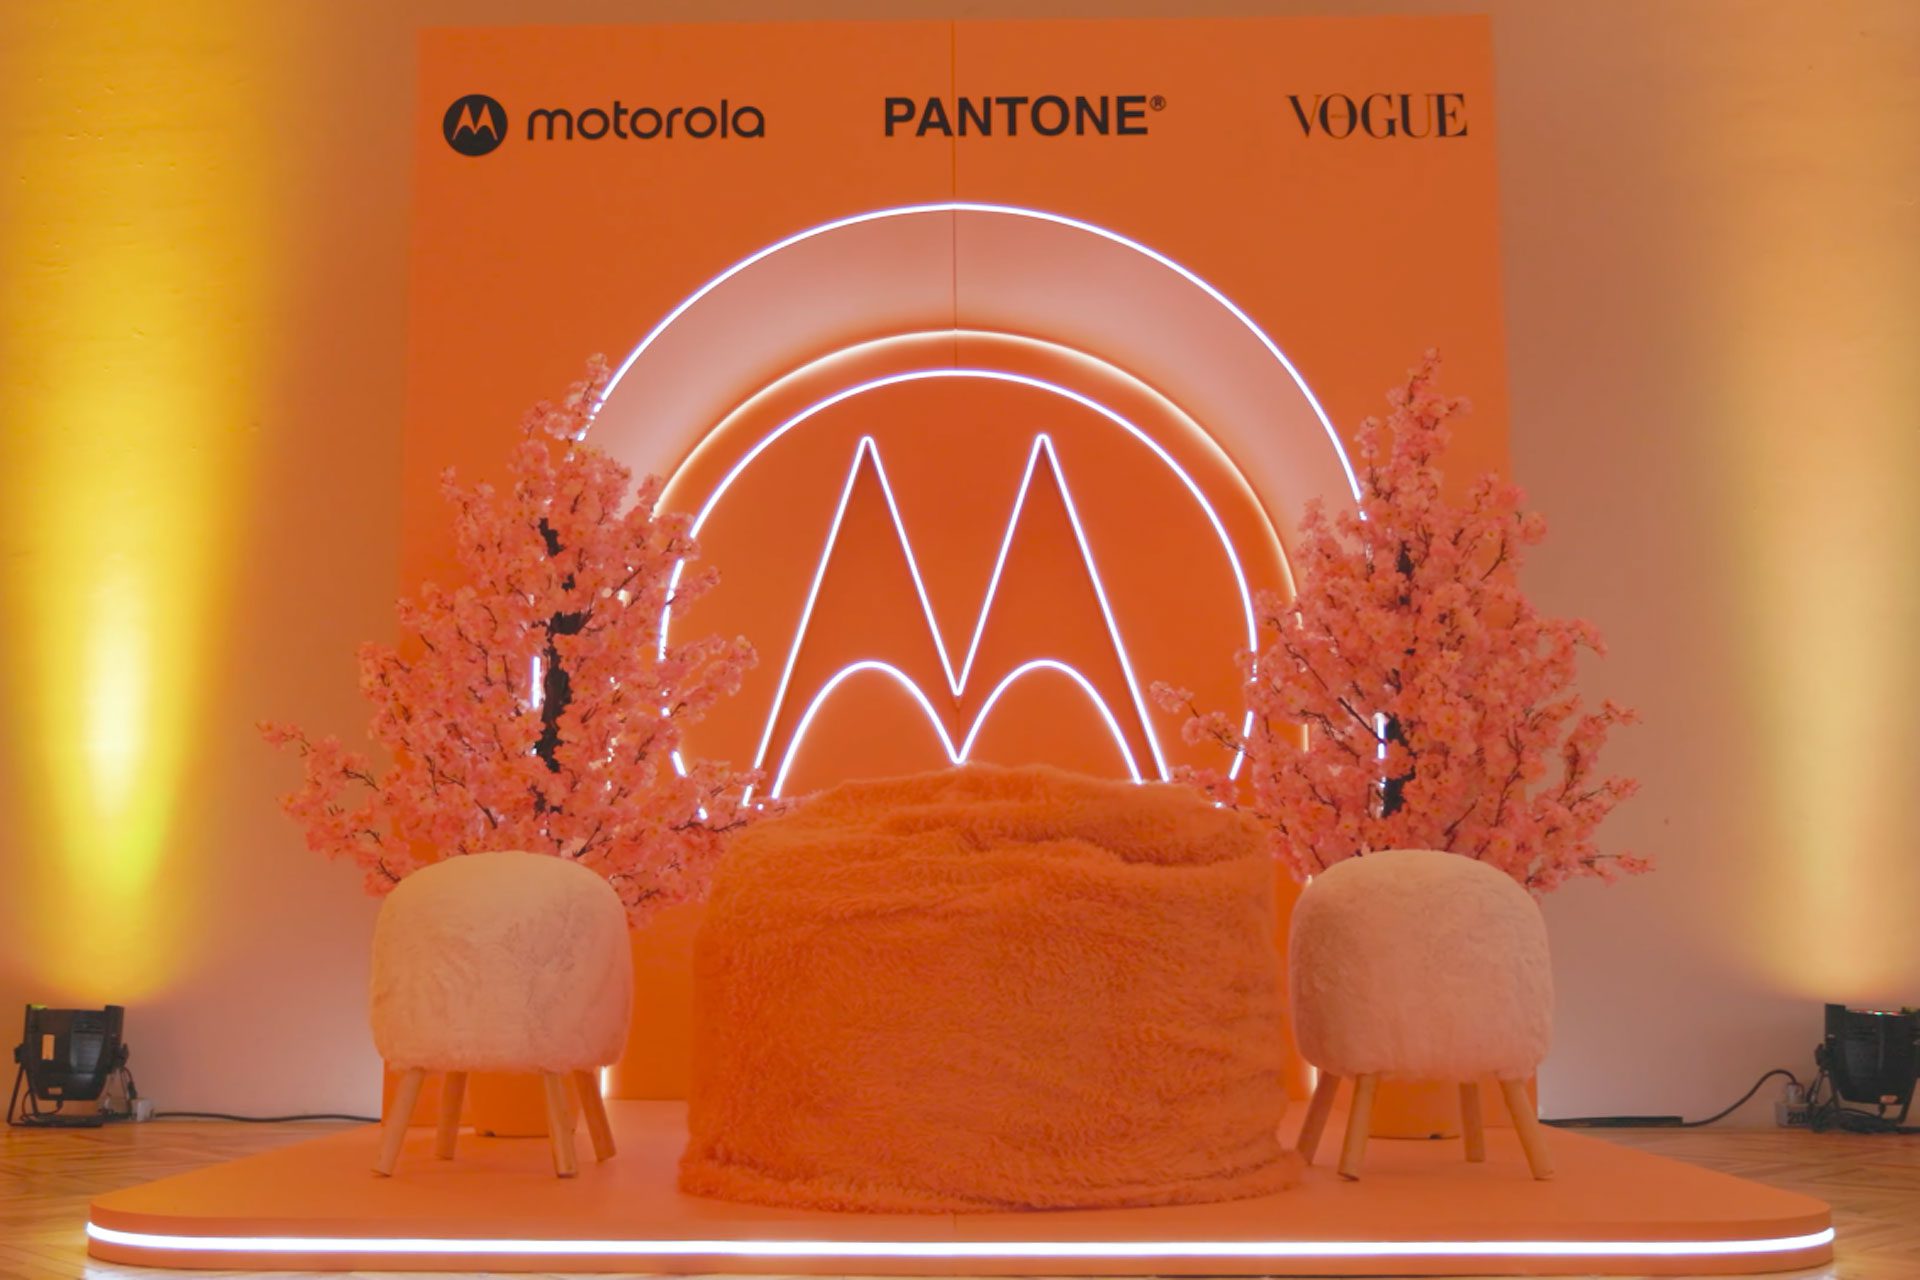 Motorola Pantone Vogue